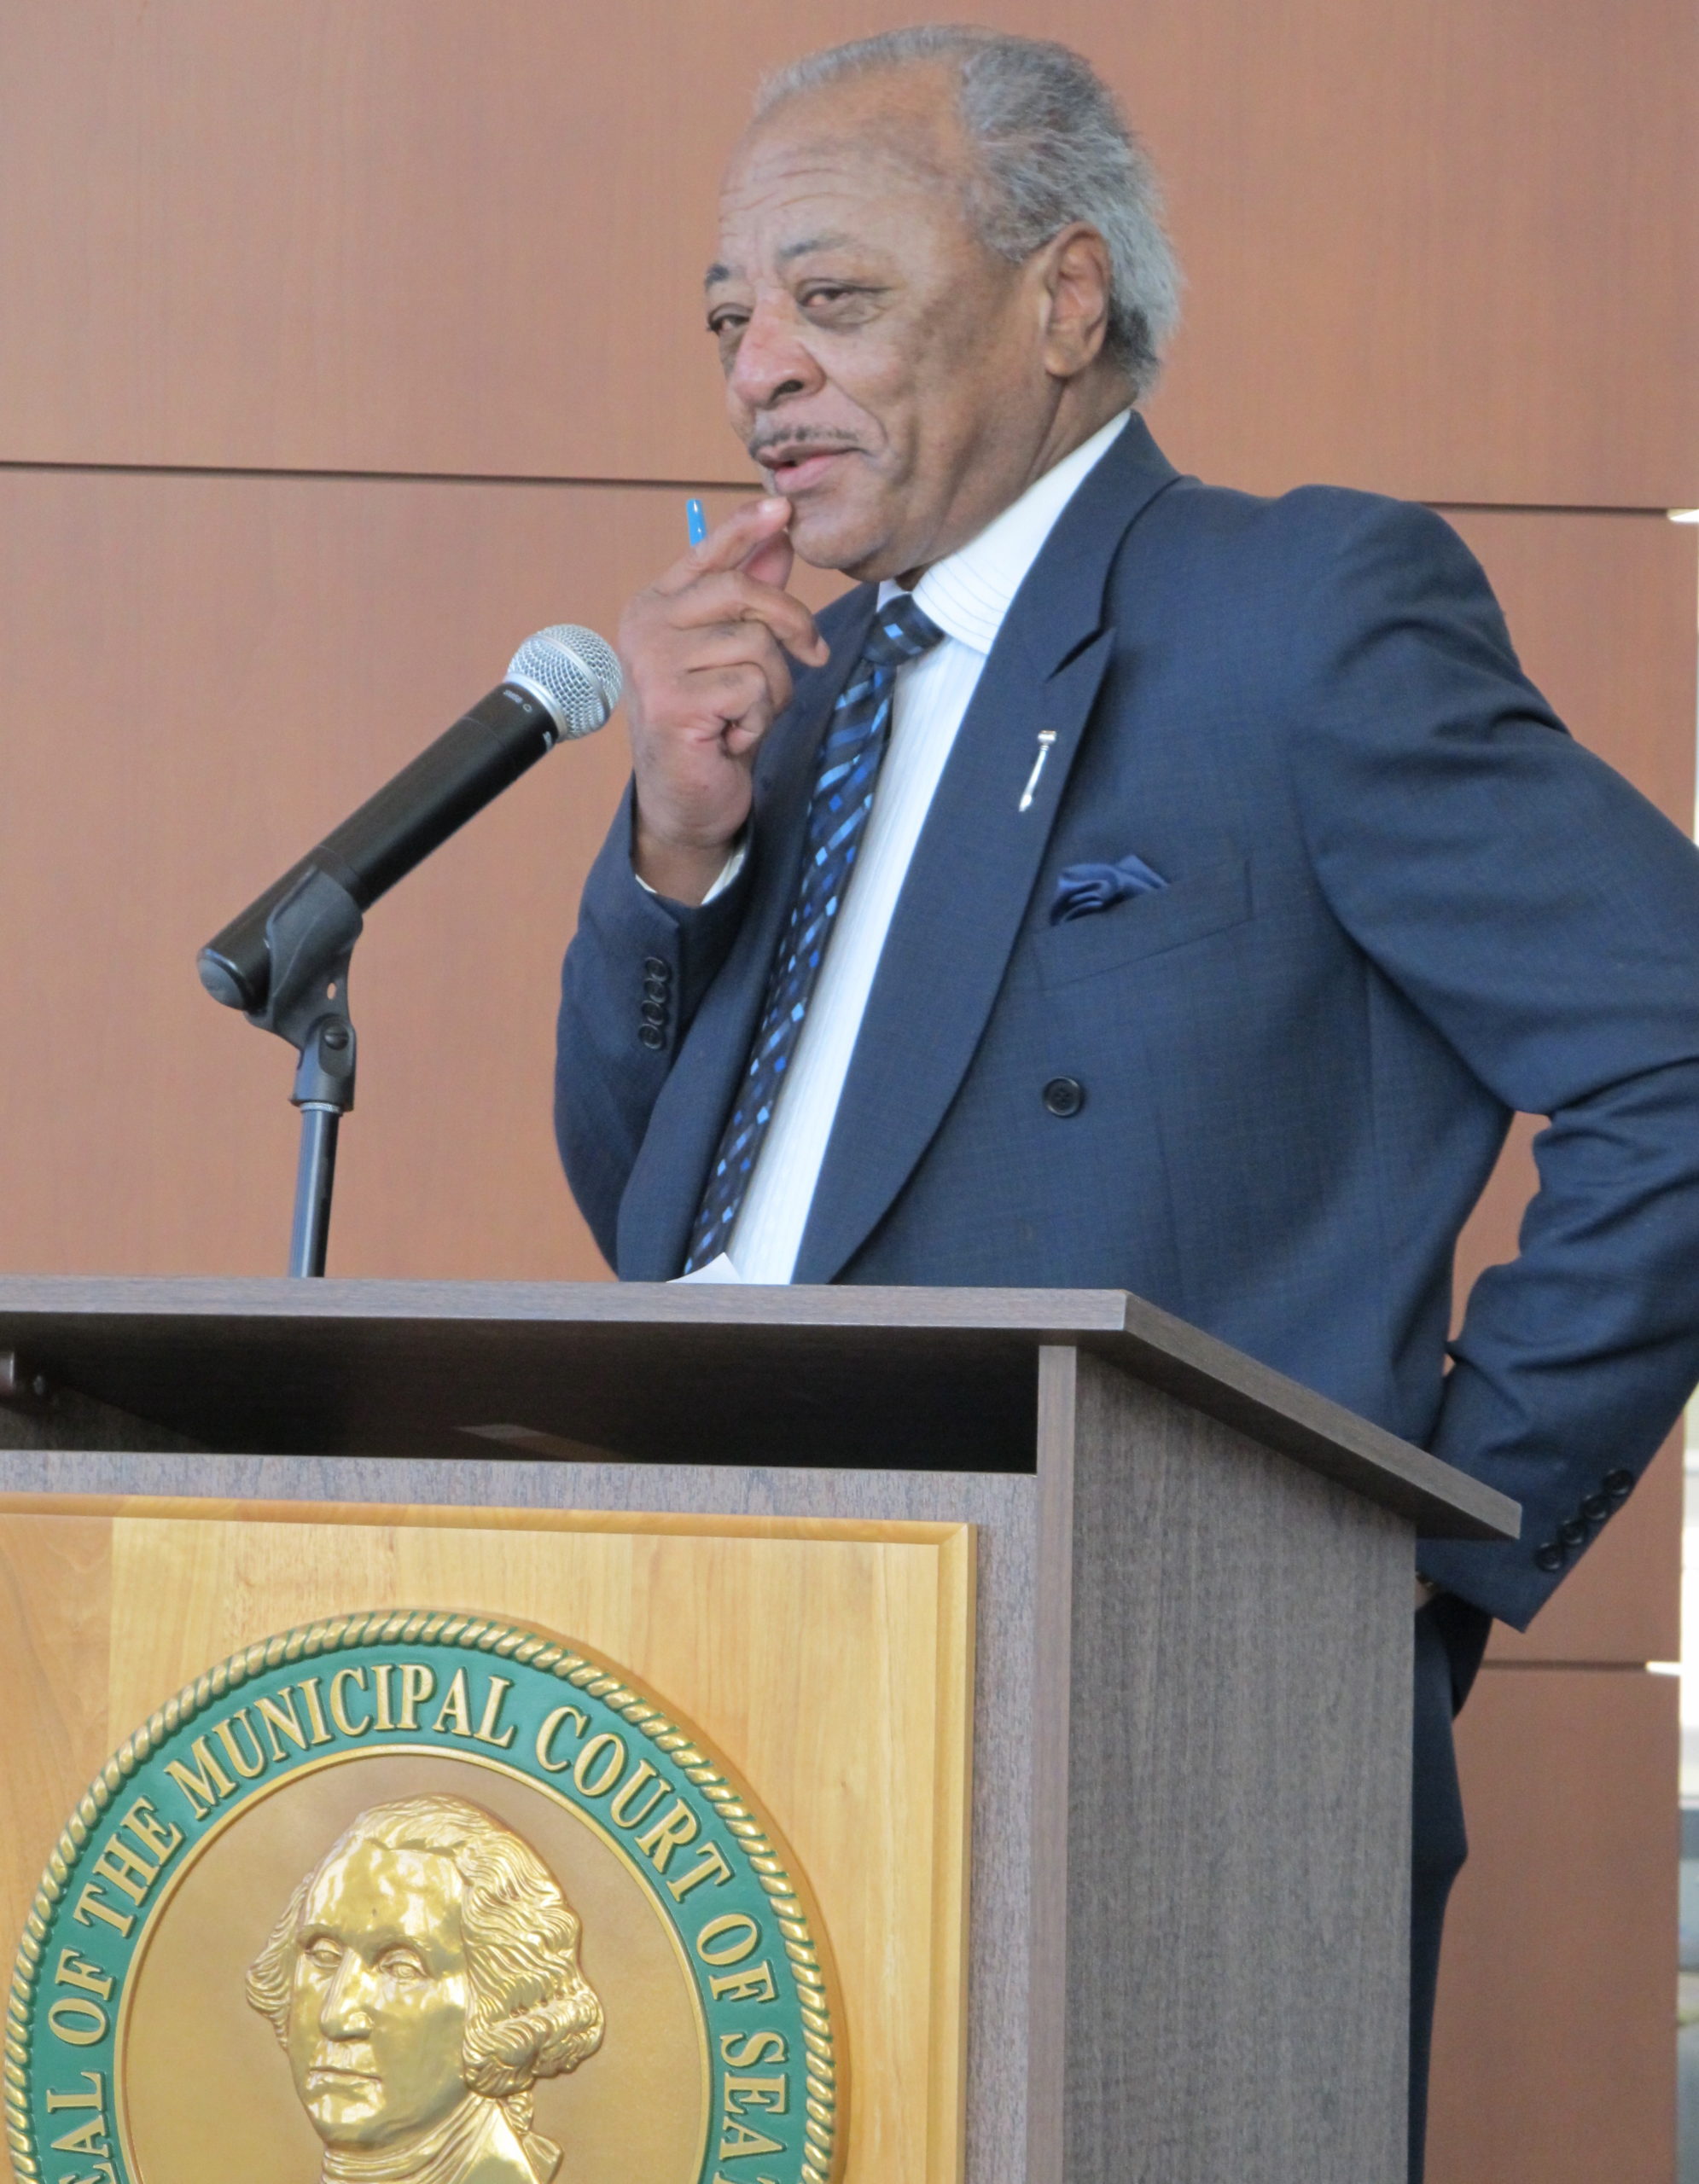 Judge Bonner speaking at a podium